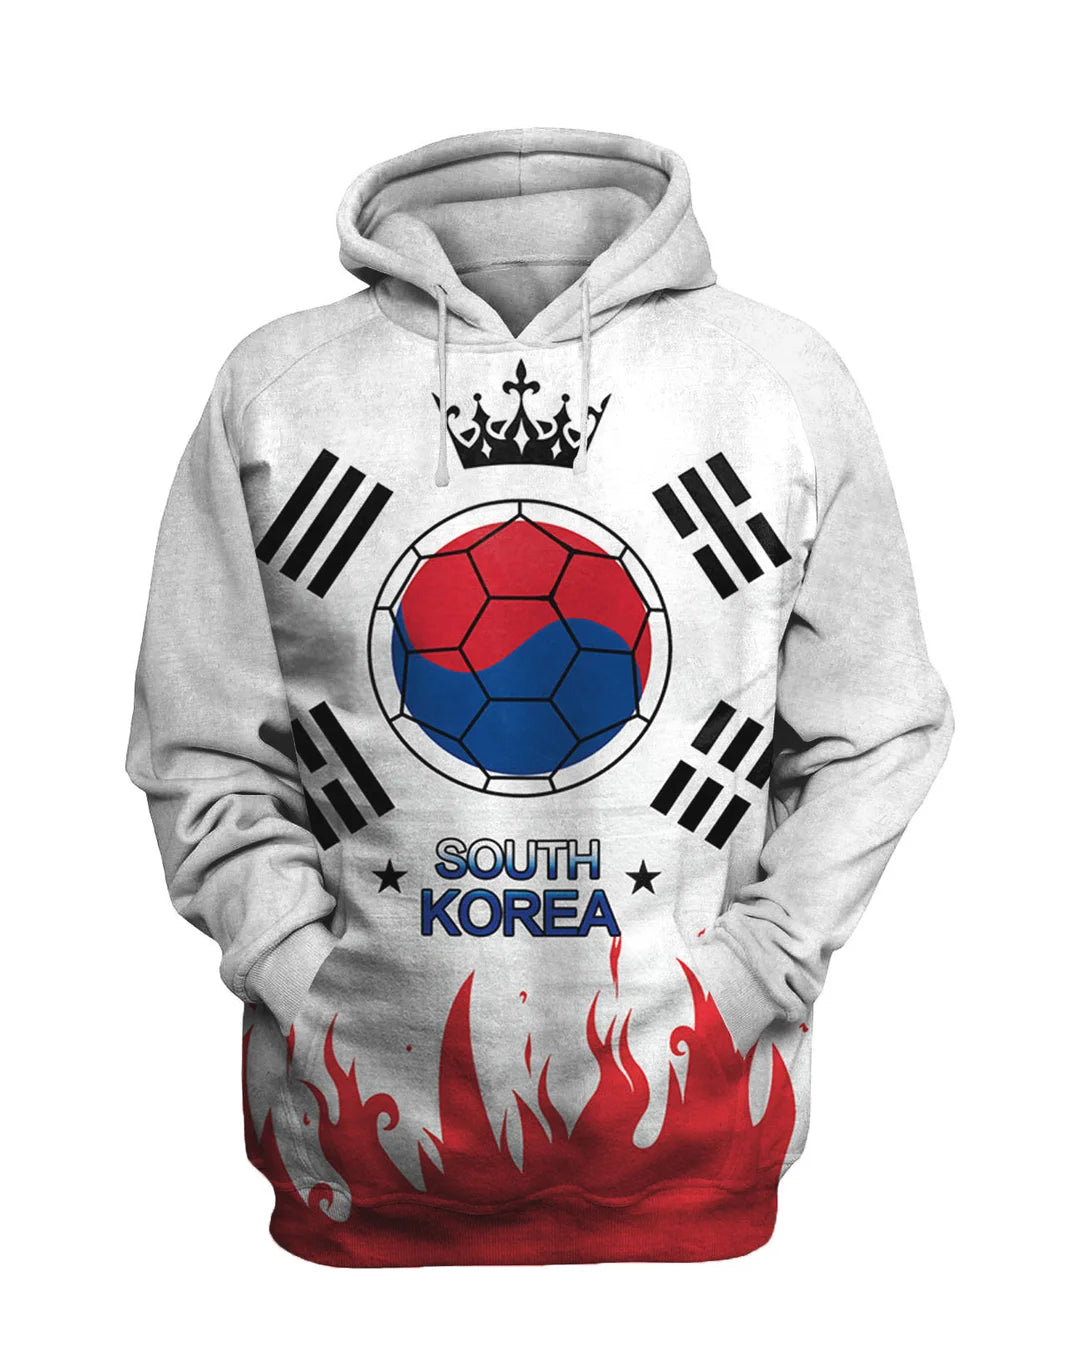 Republic of Korea Printed Sweatshirt Set